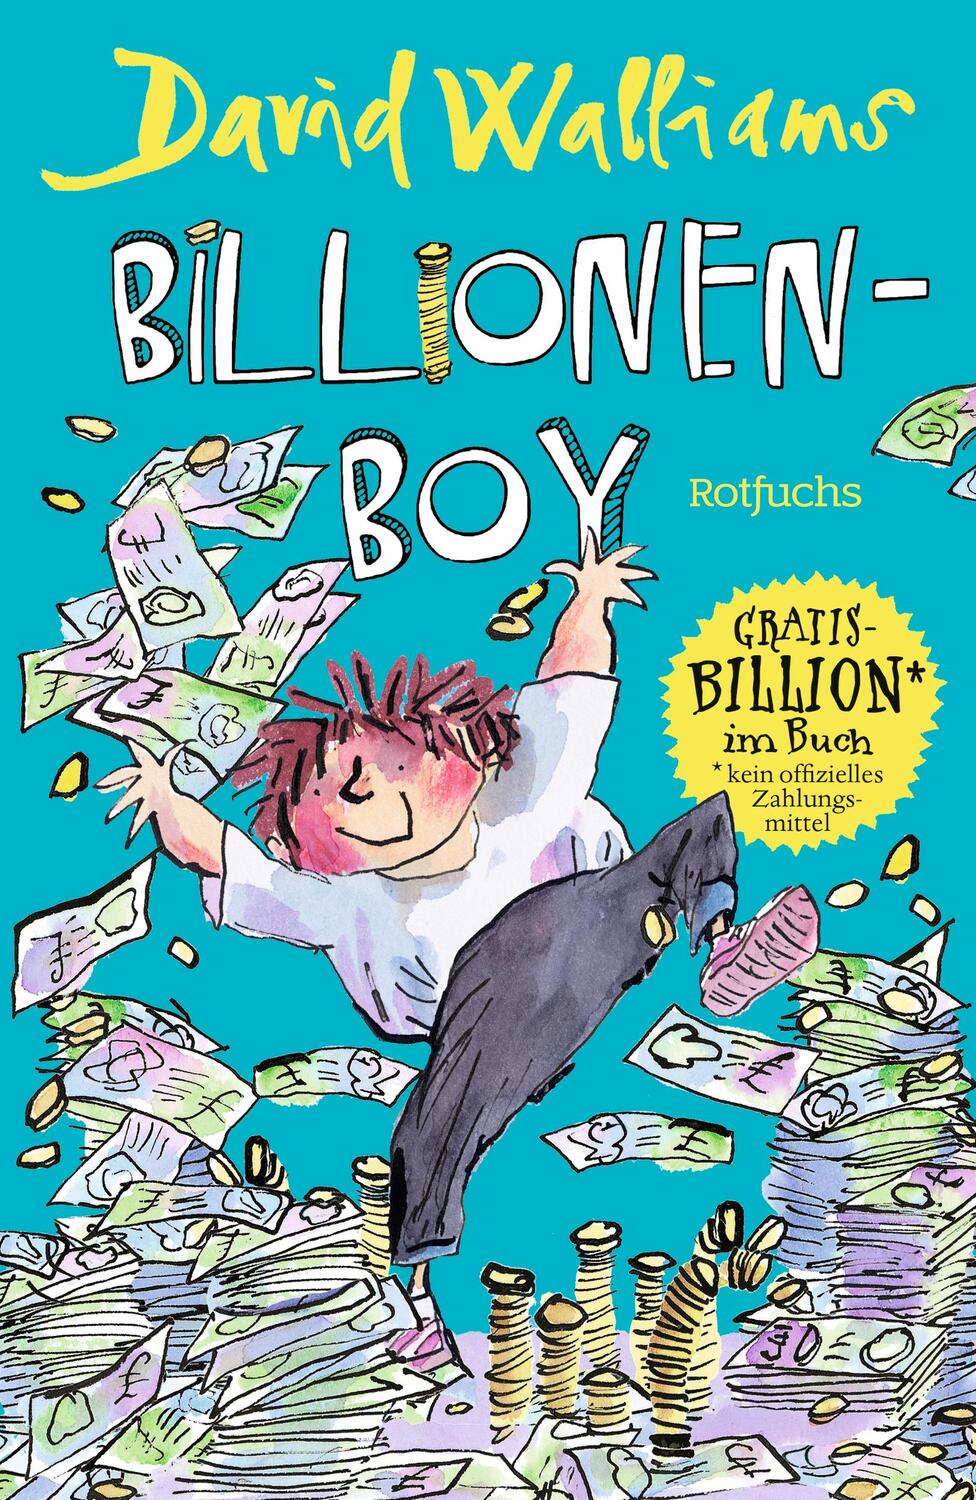 Billionen-Boy - Walliams, David